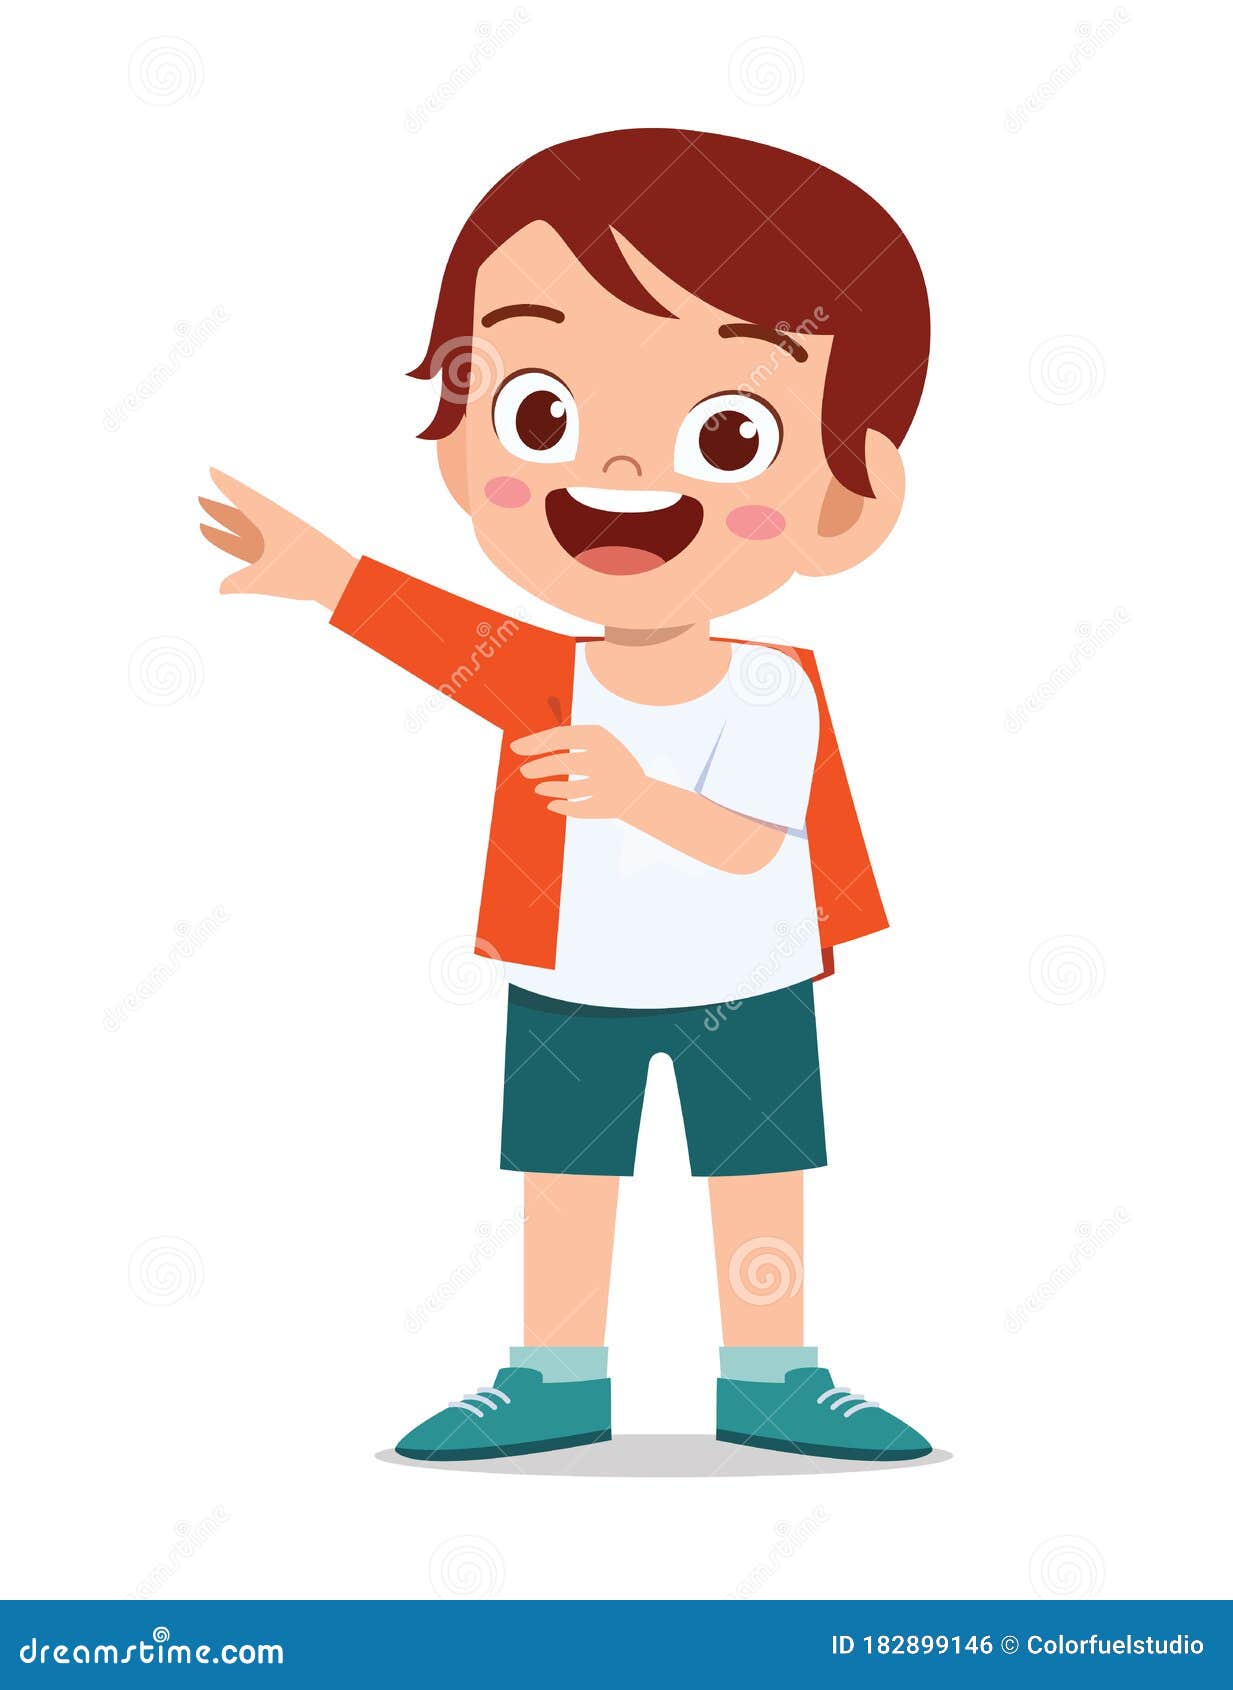 https://thumbs.dreamstime.com/z/happy-cute-little-kid-boy-wear-clothes-happy-cute-little-kid-boy-wear-clothes-182899146.jpg